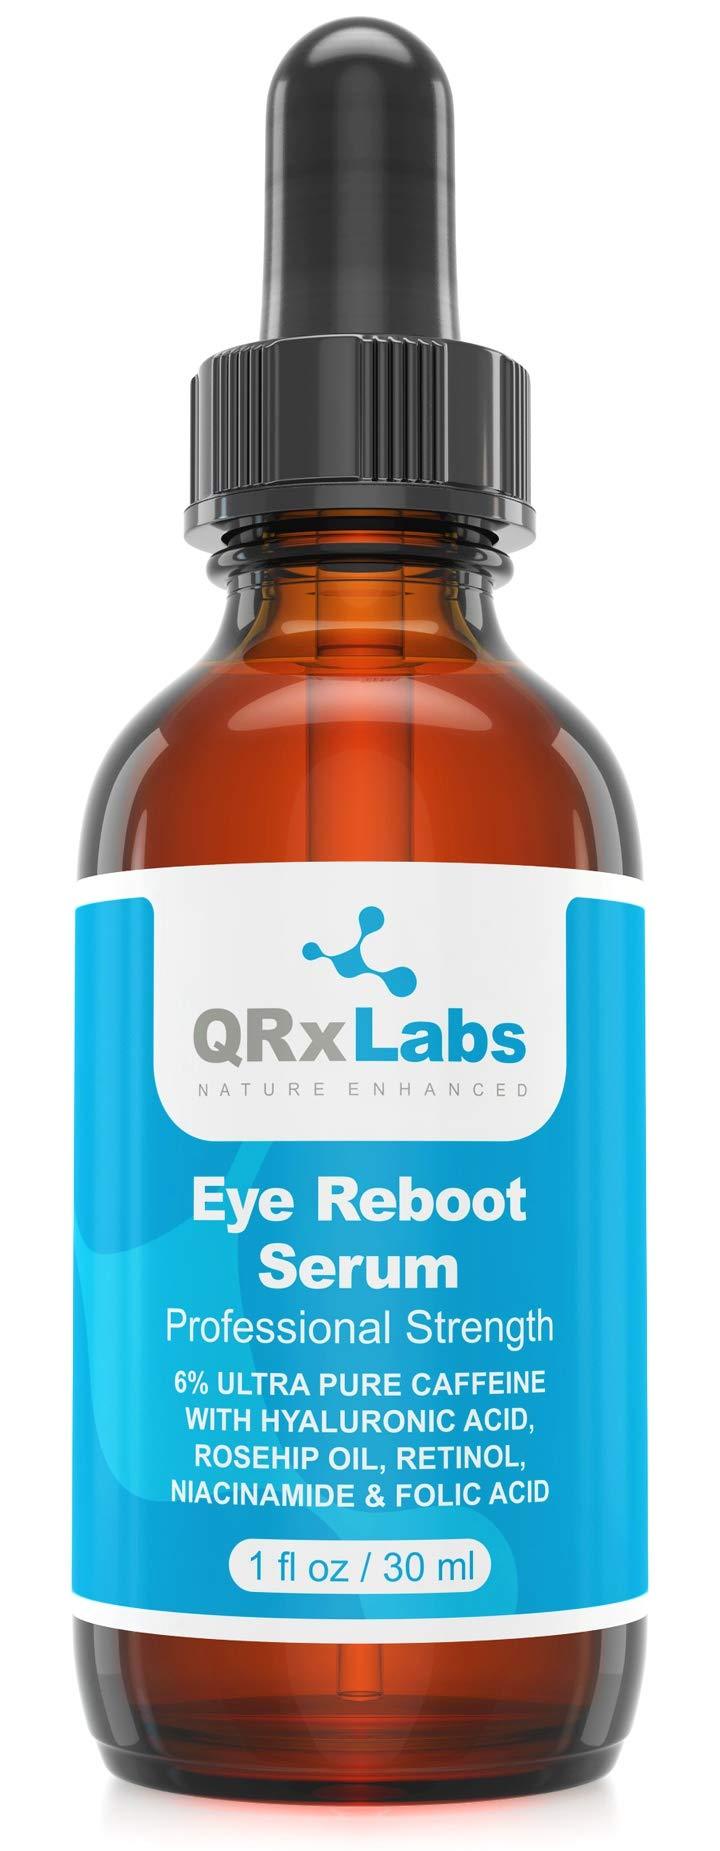 [Australia] - Eye Reboot Serum with 6% Caffeine, Hyaluronic Acid, Rosehip Oil, Retinol, Niacinamide & Folic Acid - Reduces Puffiness, Dark Circles, Crow Feet, Wrinkles and Fine Lines Around The Eyes - 1 oz / 30 ml 